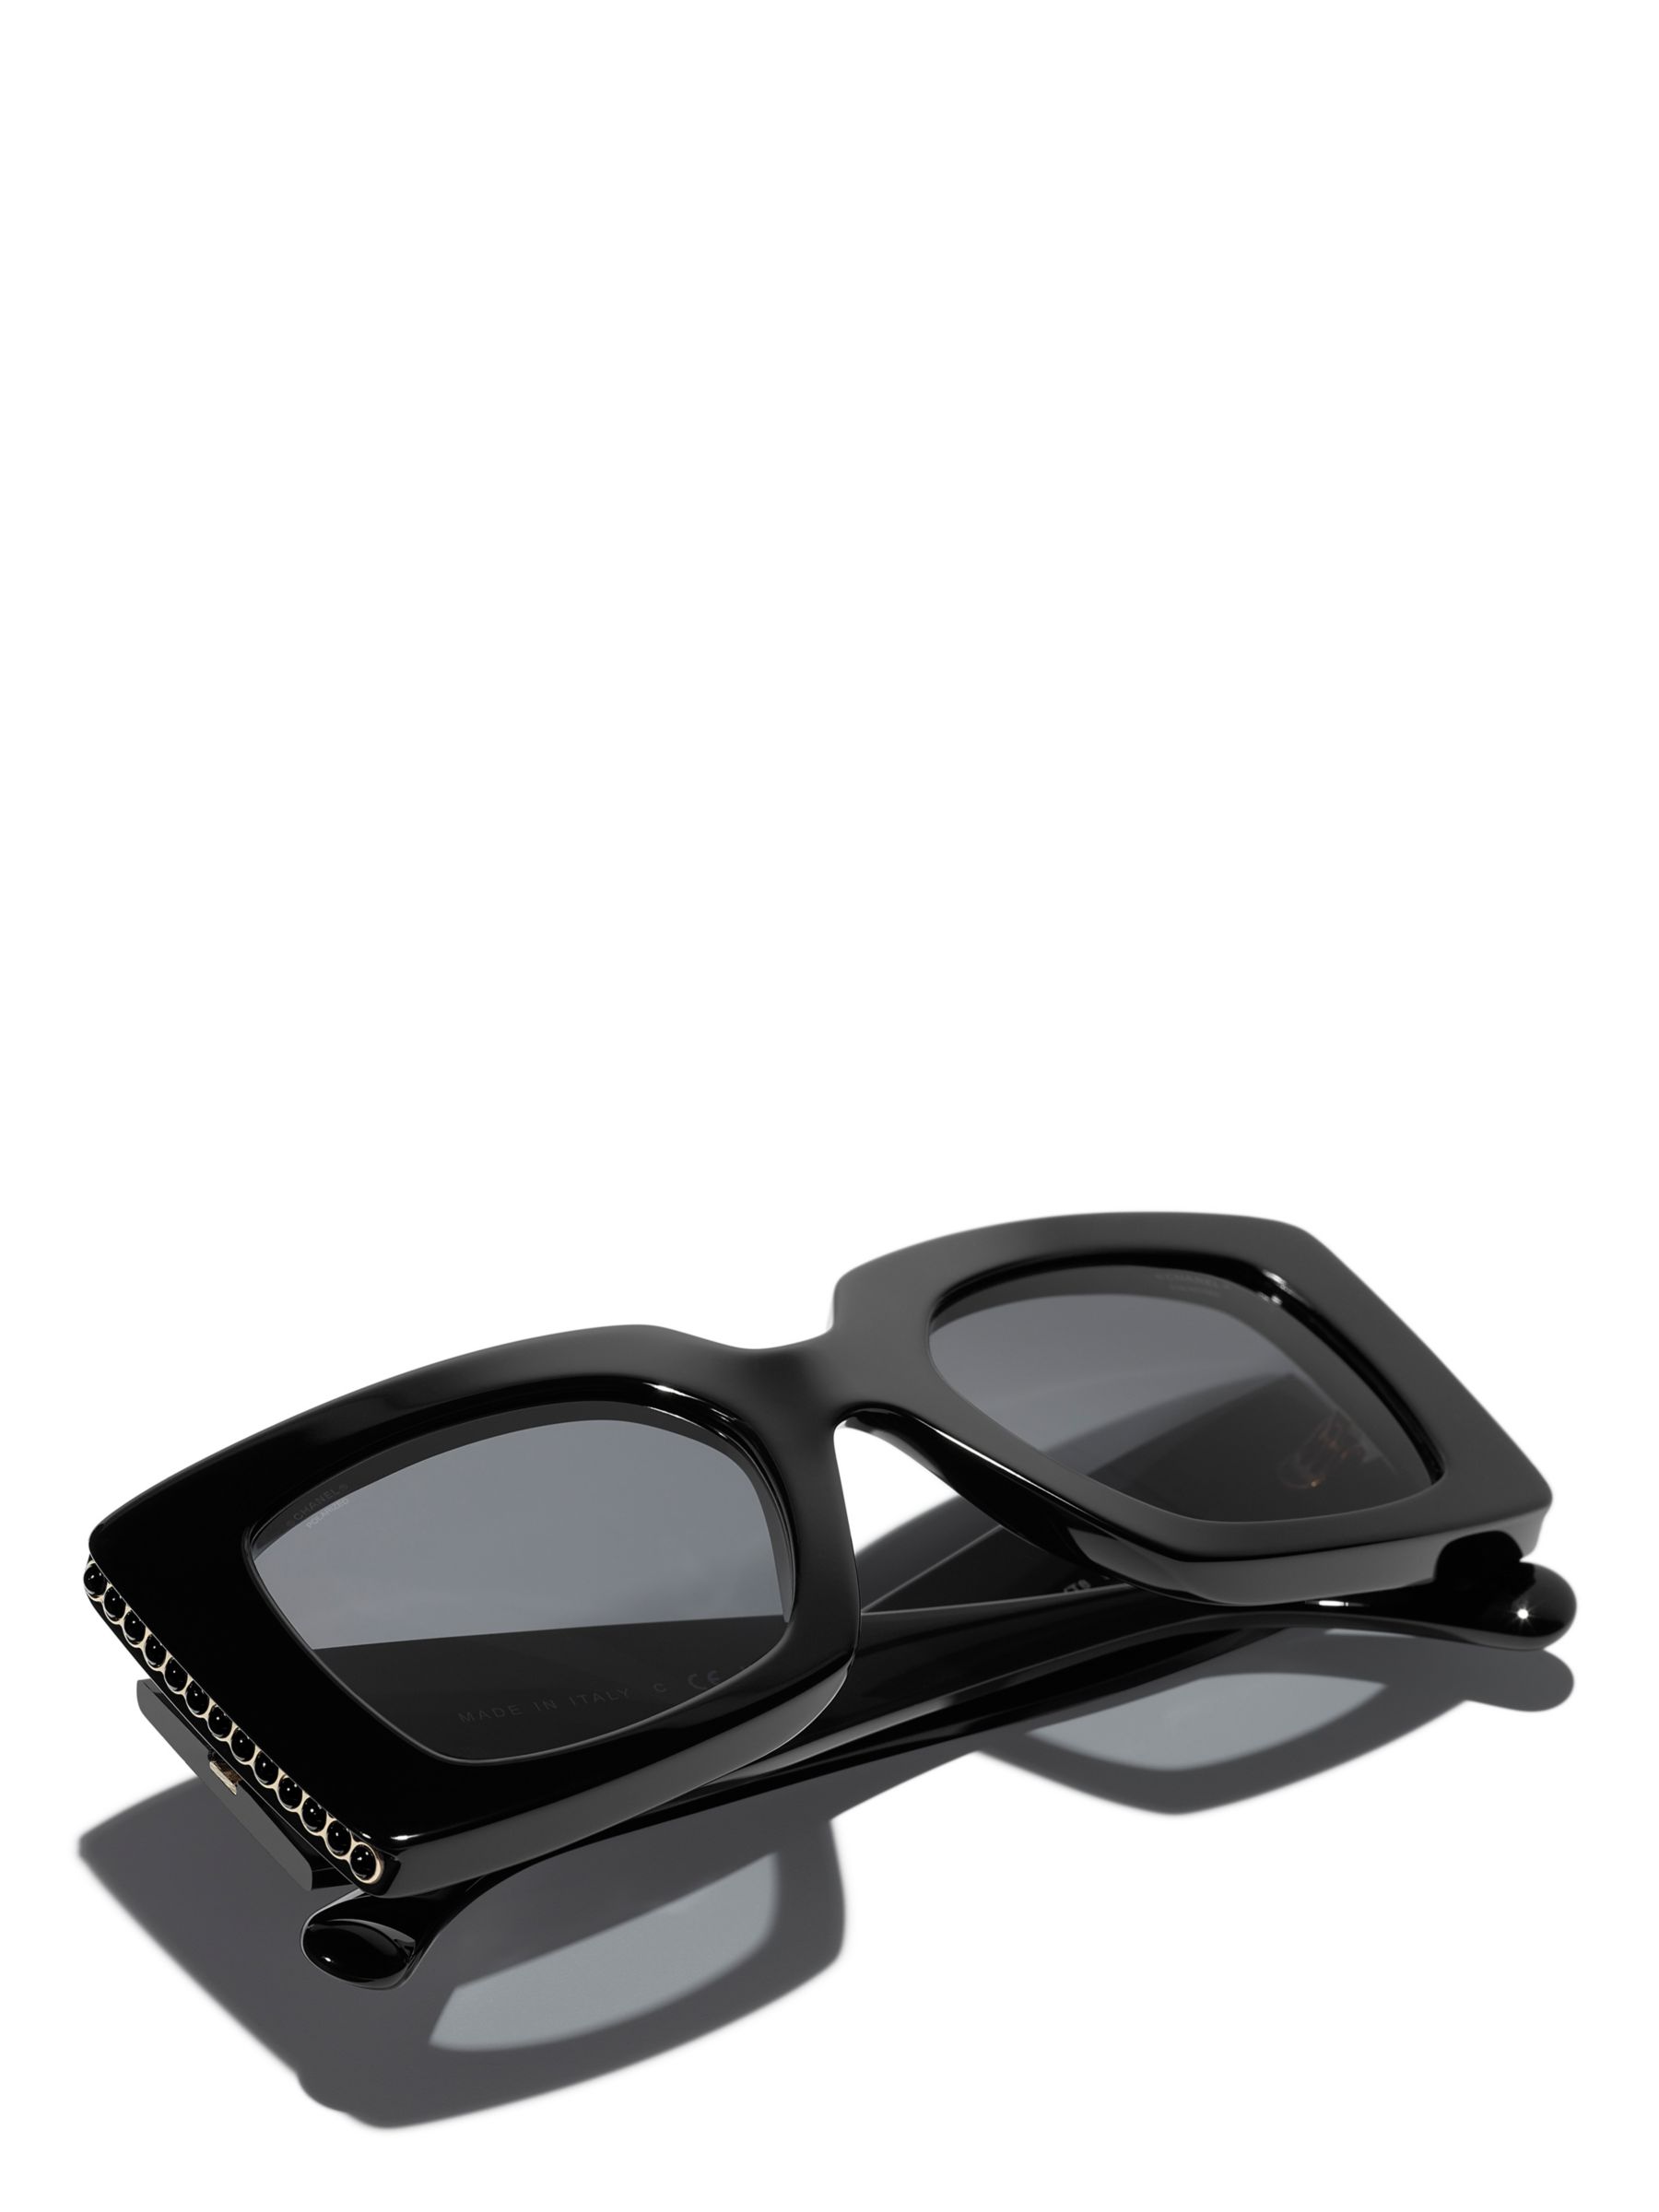 CHANEL Rectangular Sunglasses CH5480H Black/Grey at John Lewis & Partners